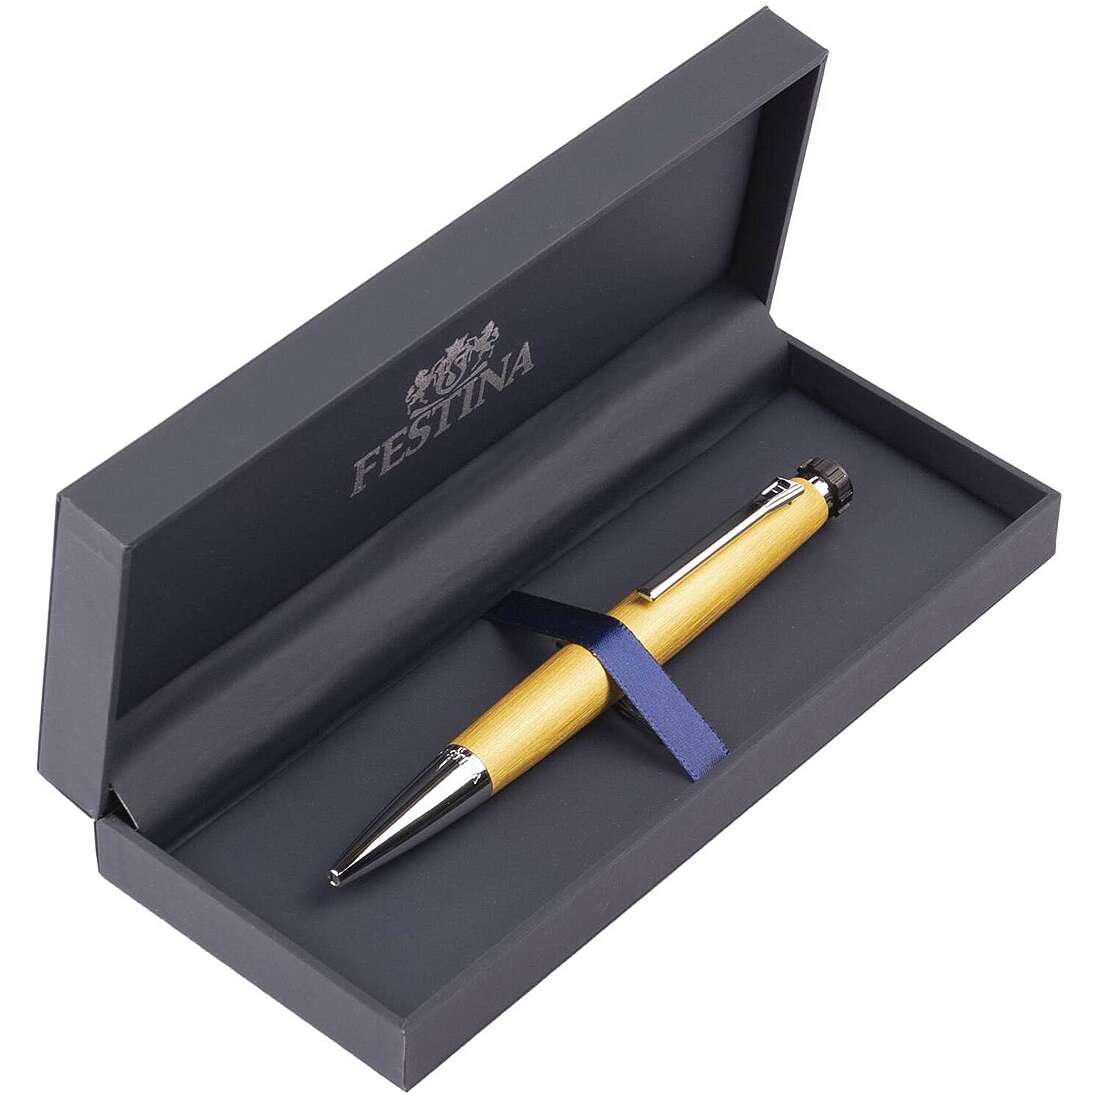 Customized pen with ballpoint by Festina Chrono Bike FWS4104/S